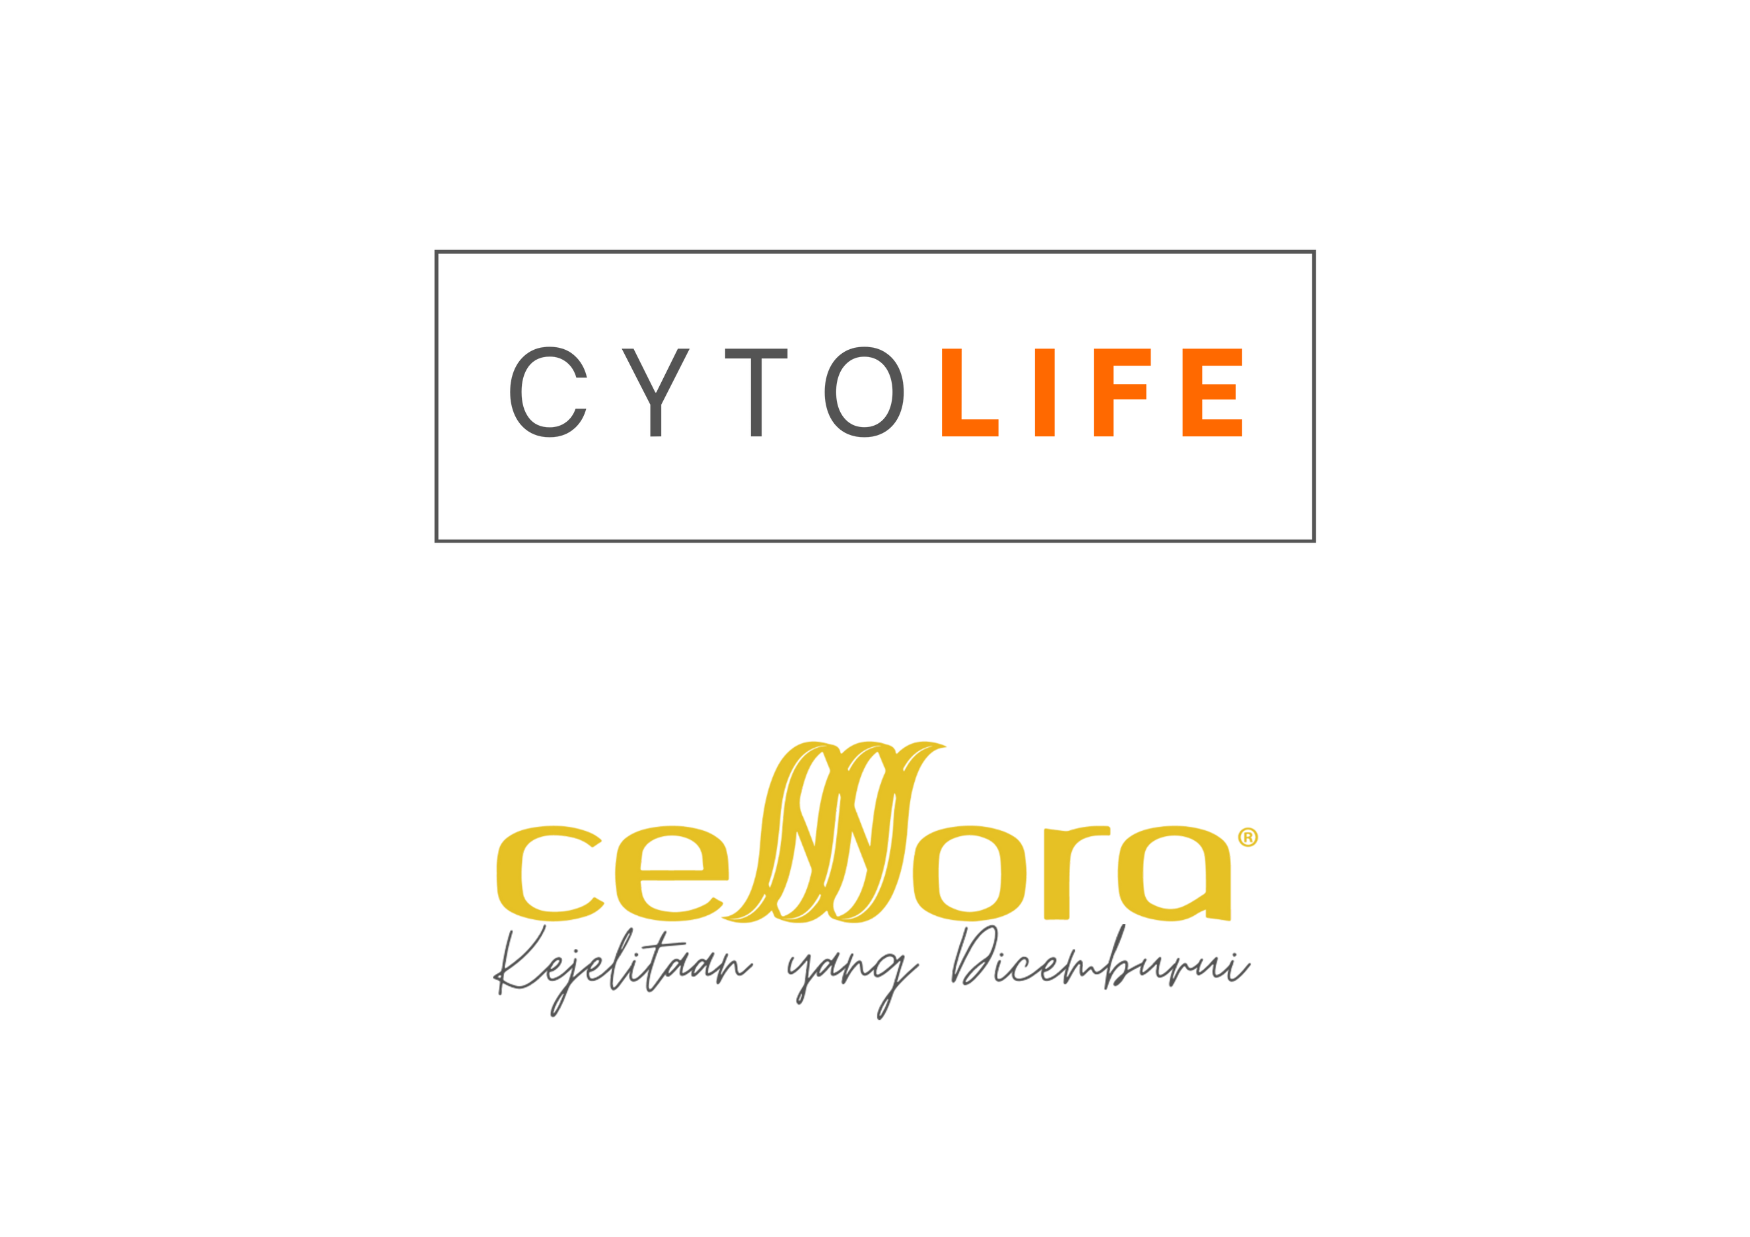 CytoLife & Celllora (1)